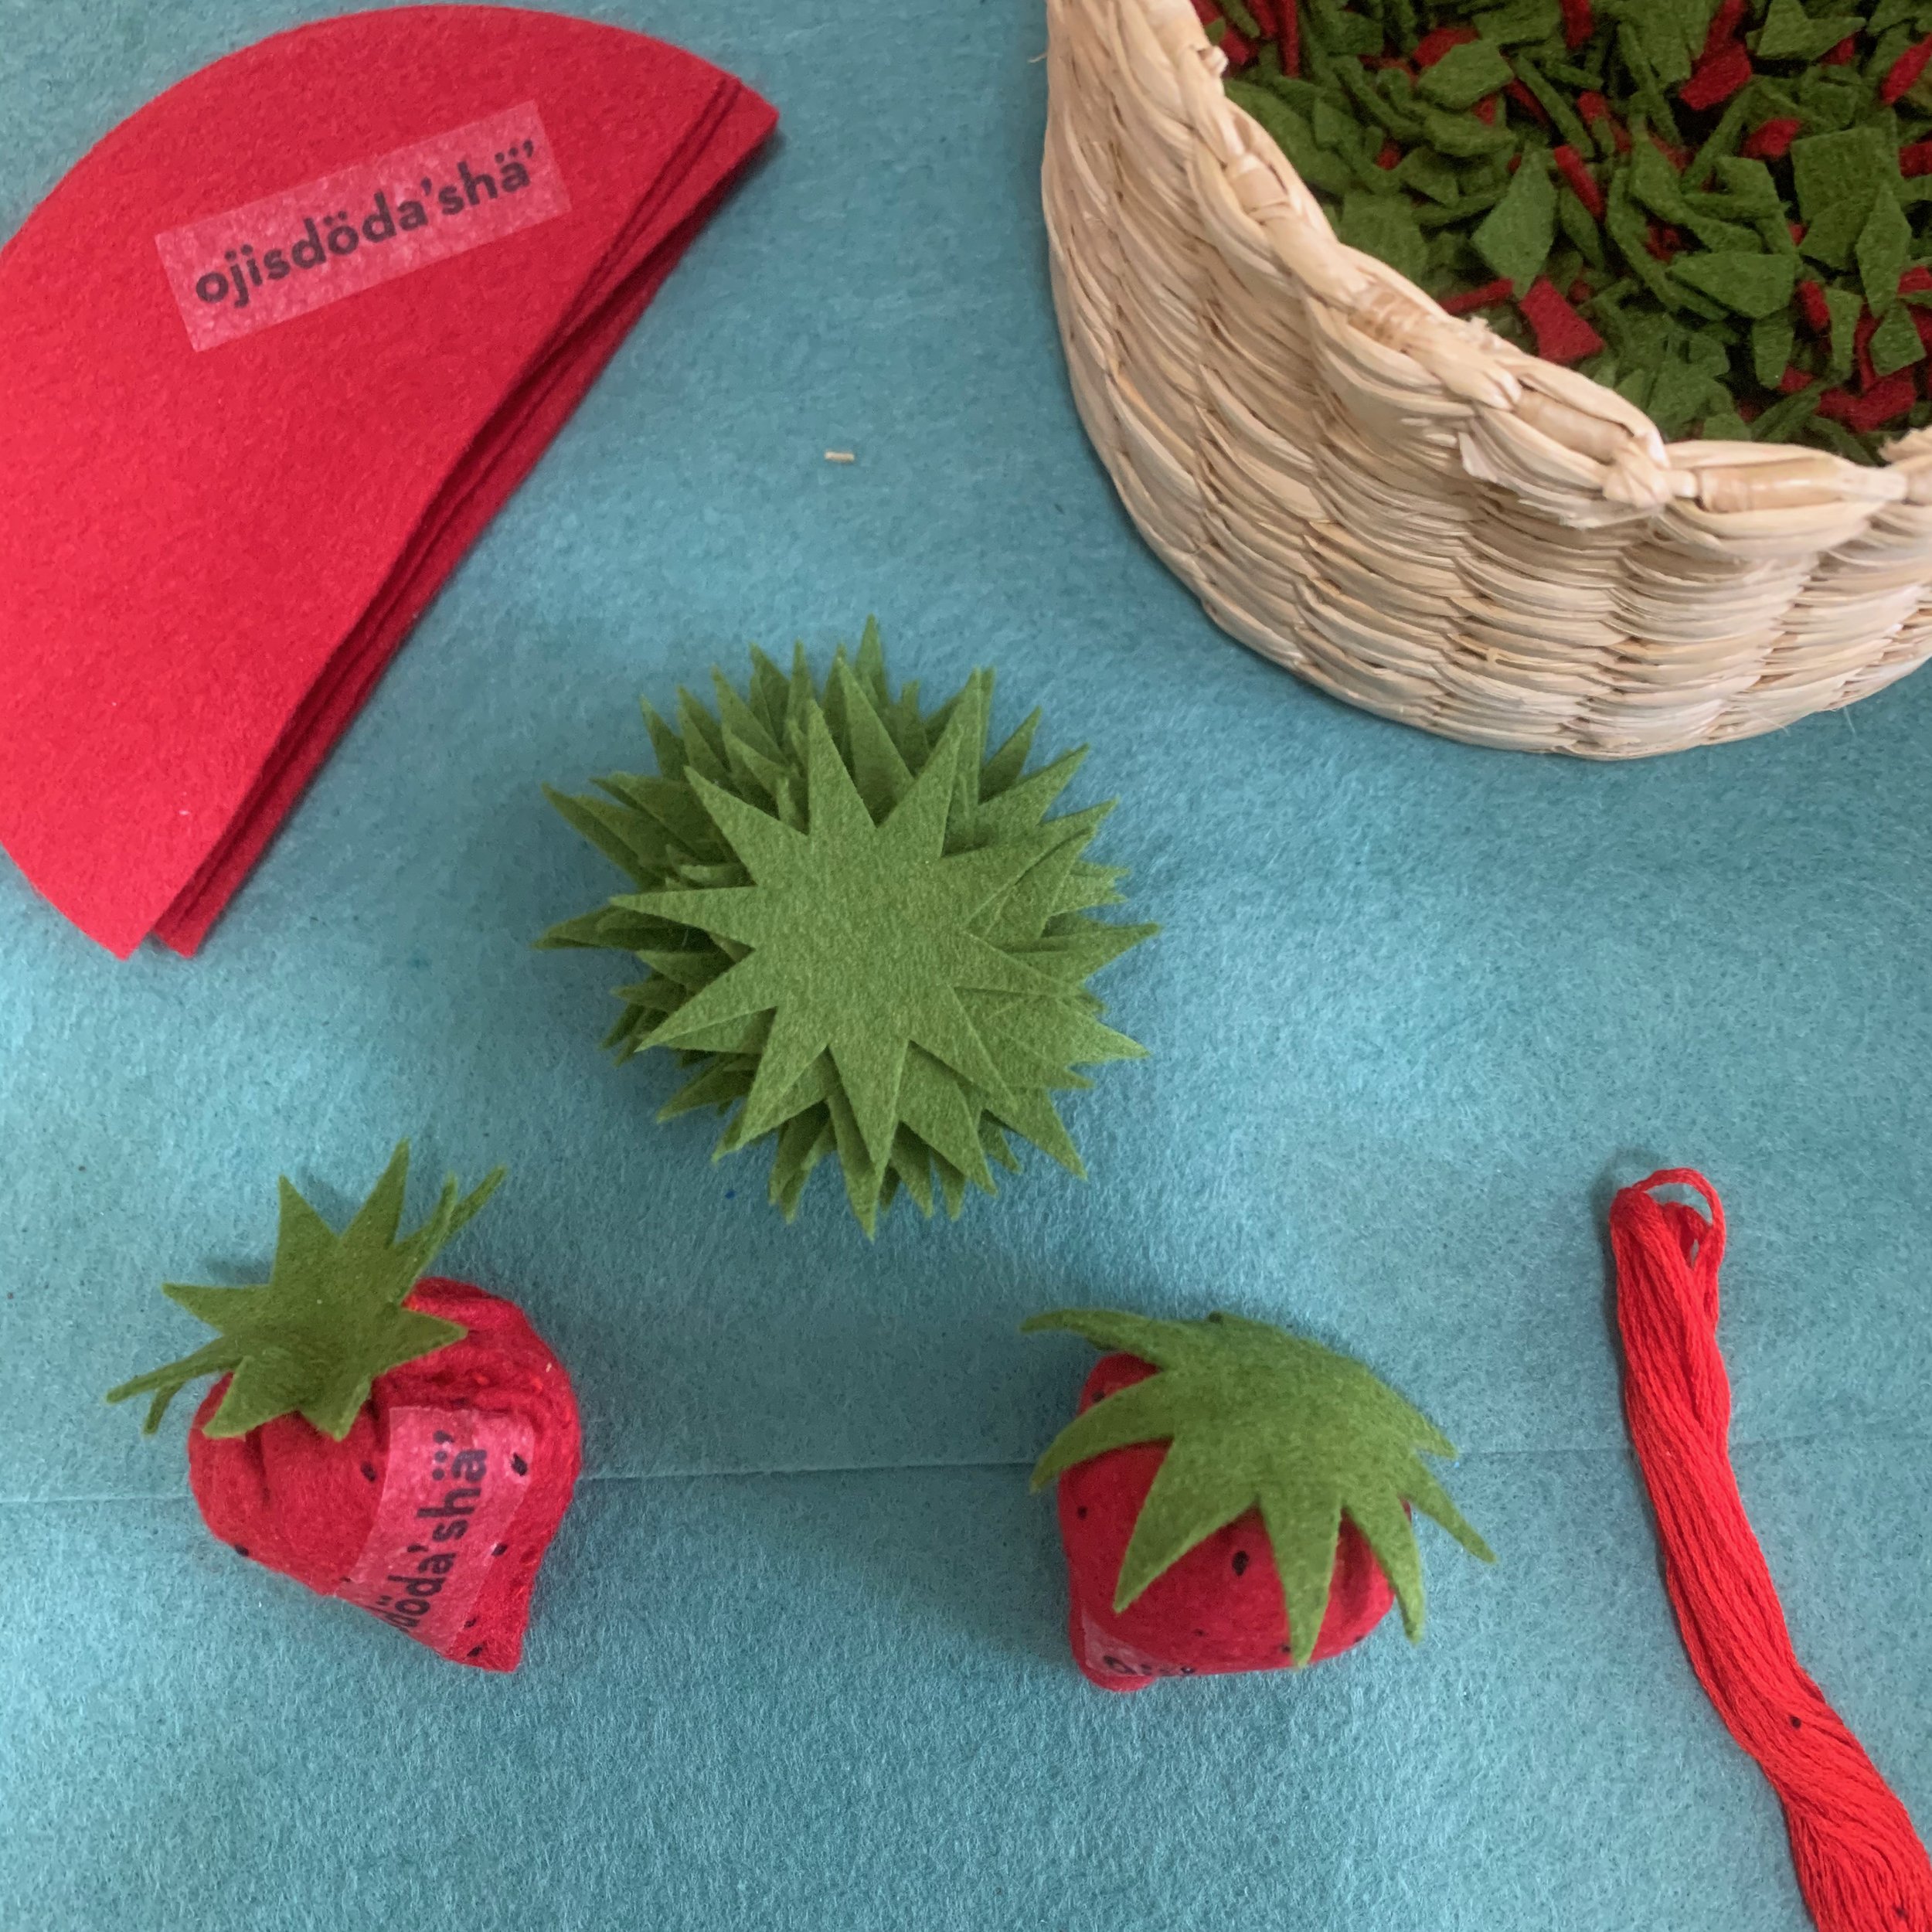  Sewing activity where kids or parents create felt strawberries with the Seneca word ojisdöda’shä’ printed on the felt  